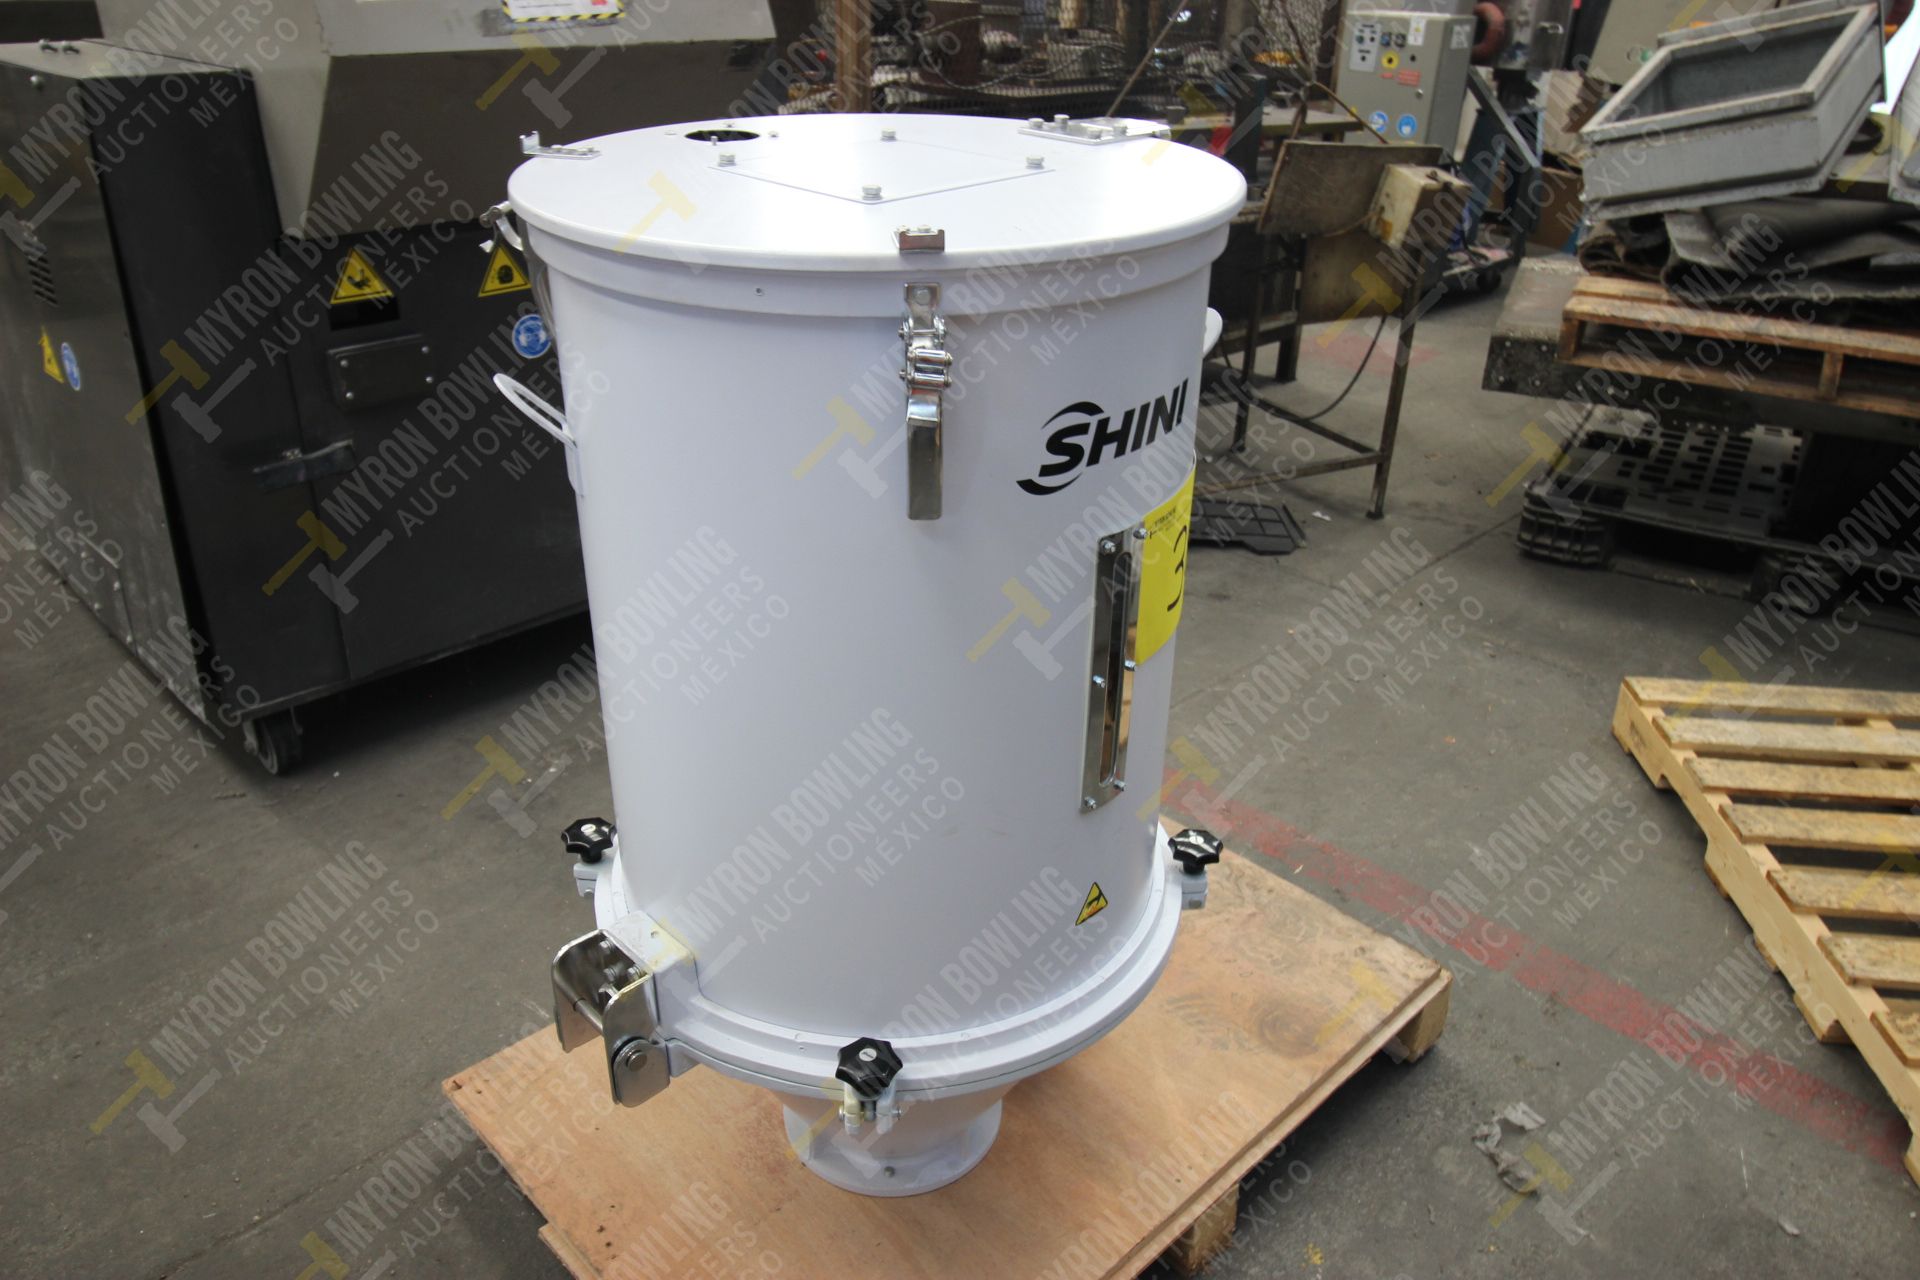 Shini Plastics Technologies 100kg hopper dryer mod. SHD-100SL-CE, with no control cabinet and blower - Image 3 of 14